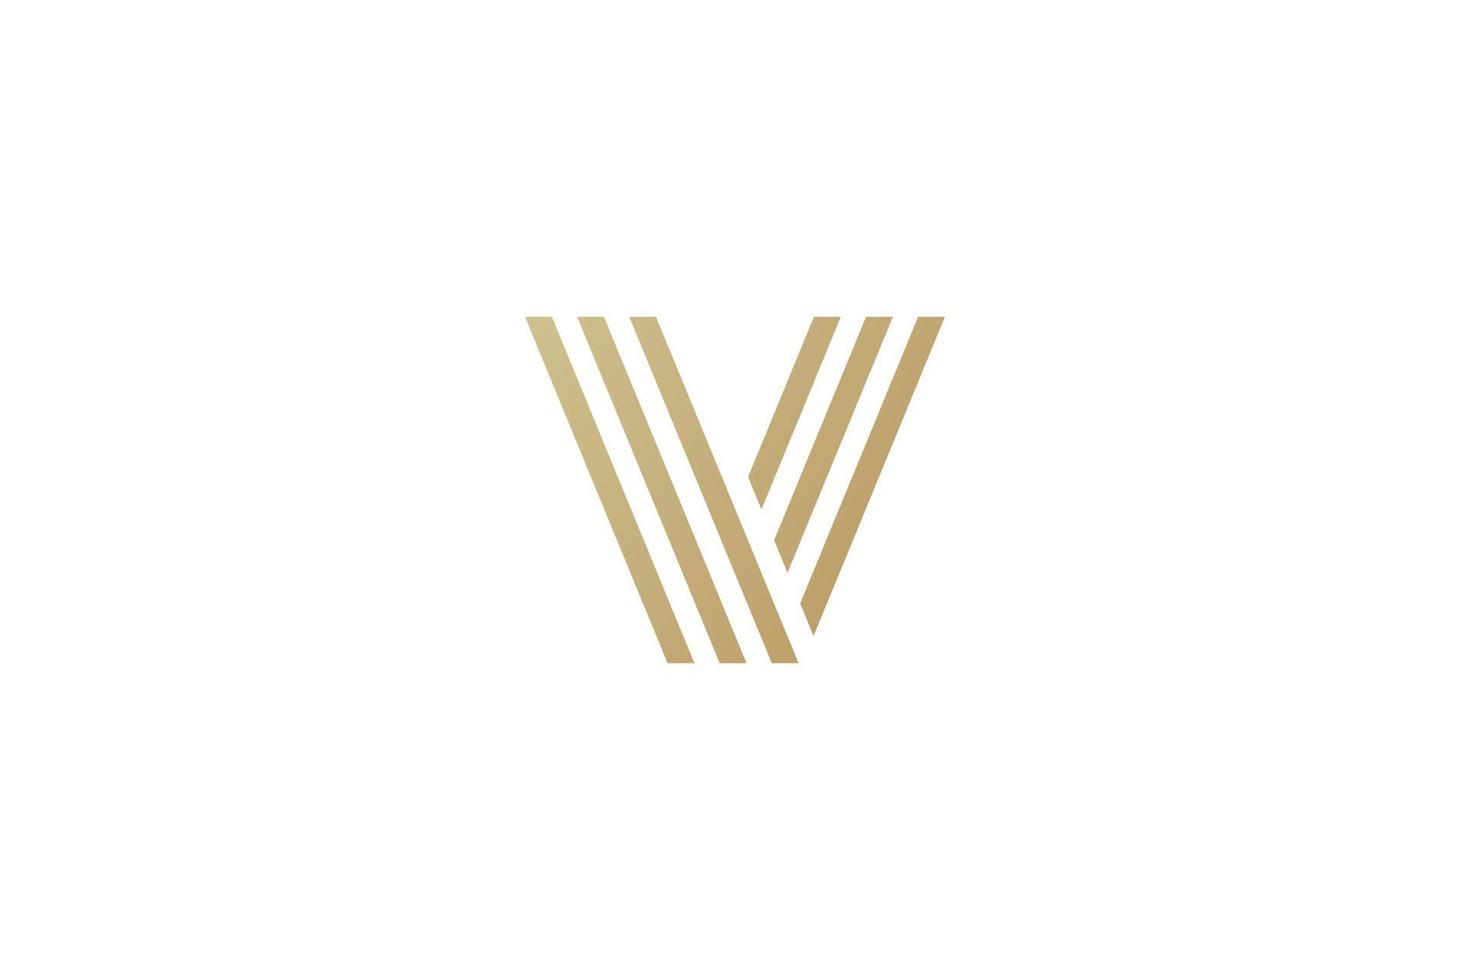 letter V logo . abstract letter v logo design . clean and modern style . vector illustration